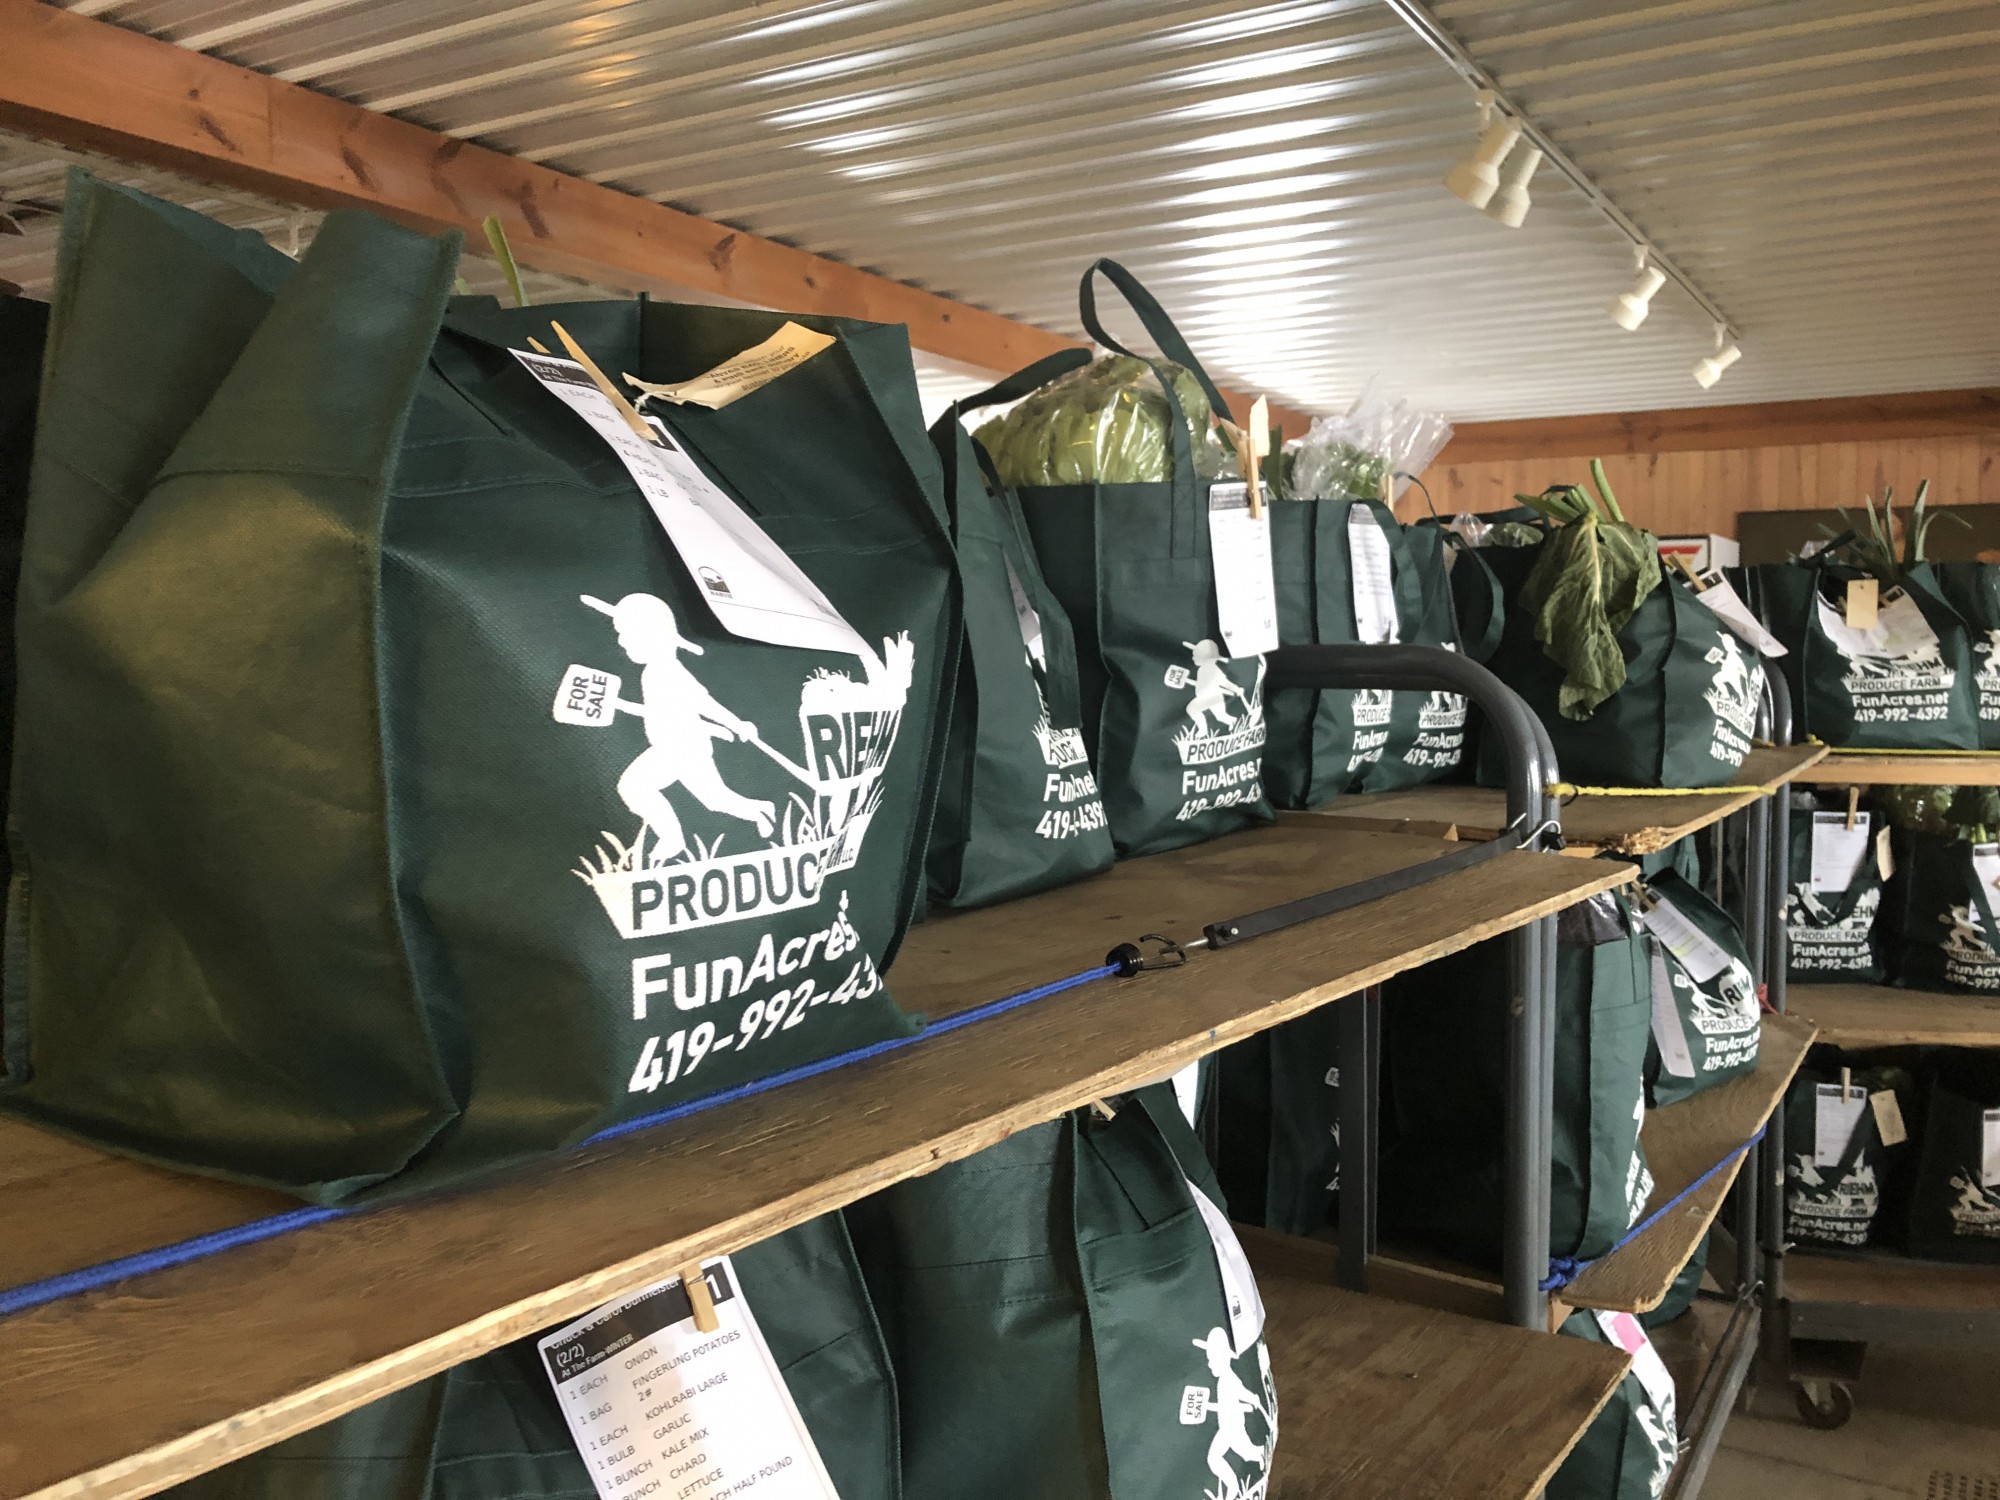 Riehm's Produce Farm offers Summer Veggie Boxes